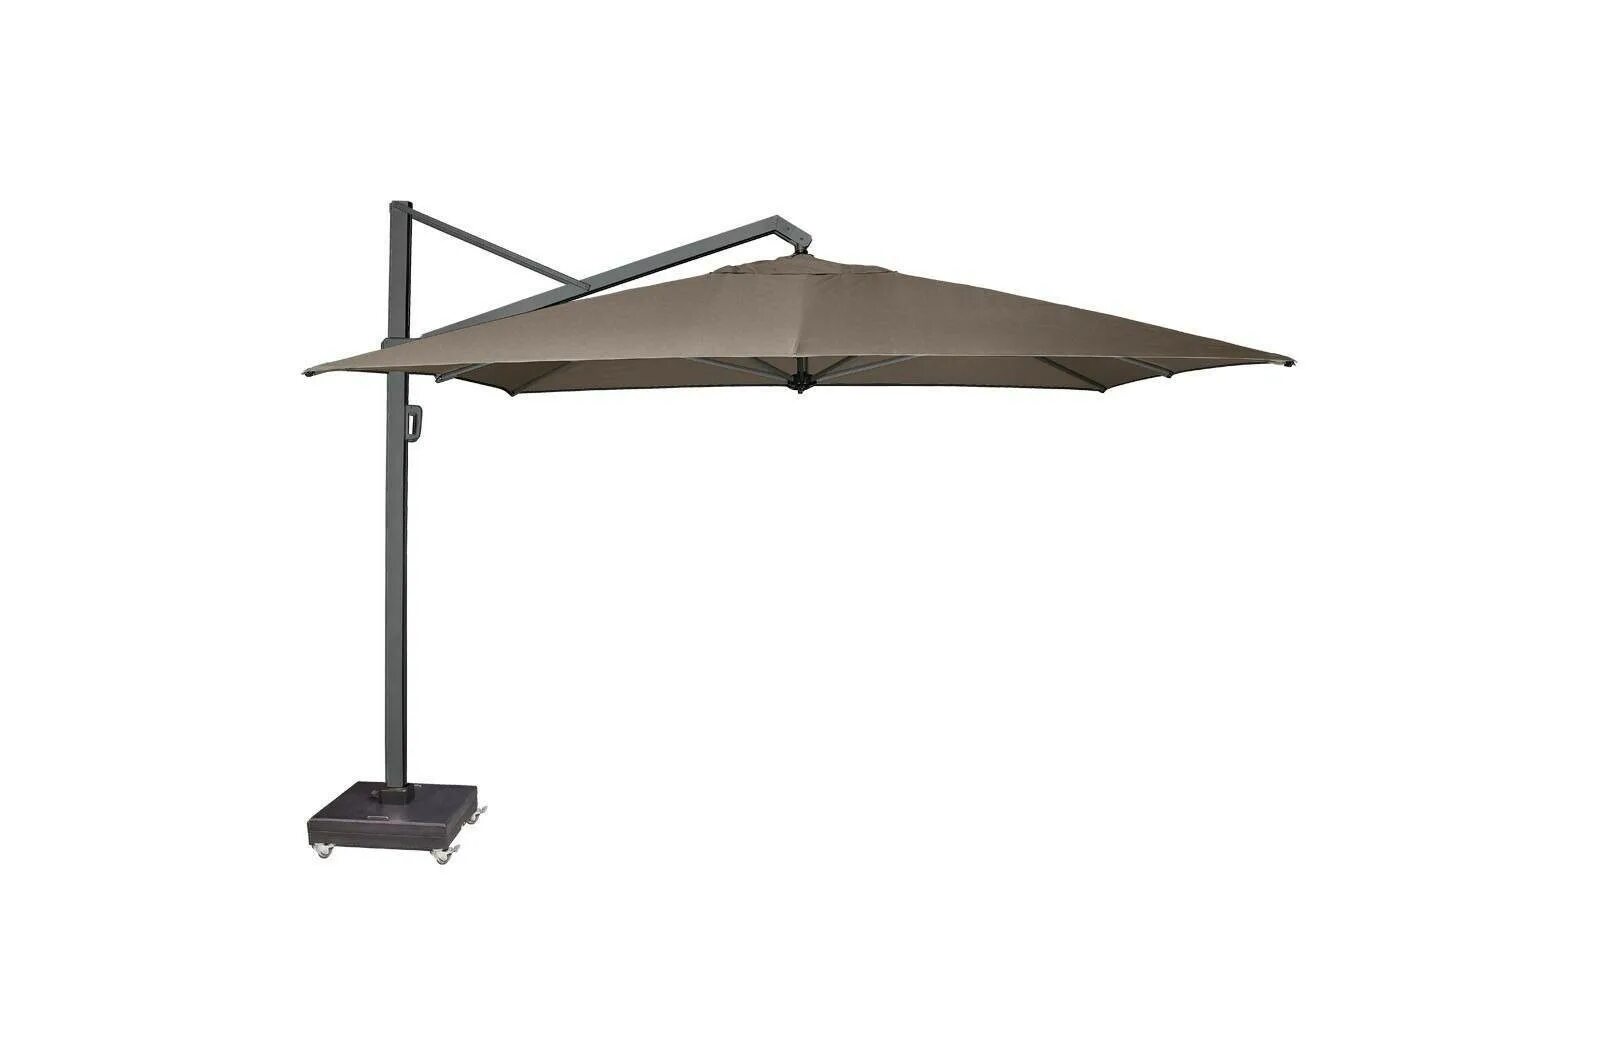 Тент для гриля Lagos 240х150. Тент для гриля Lagos 240х150х232. Уличный зонт Larus, 3.6x5 м. Зонт садовый FUNFIT 300cm Grey (1621). Зонтик рост